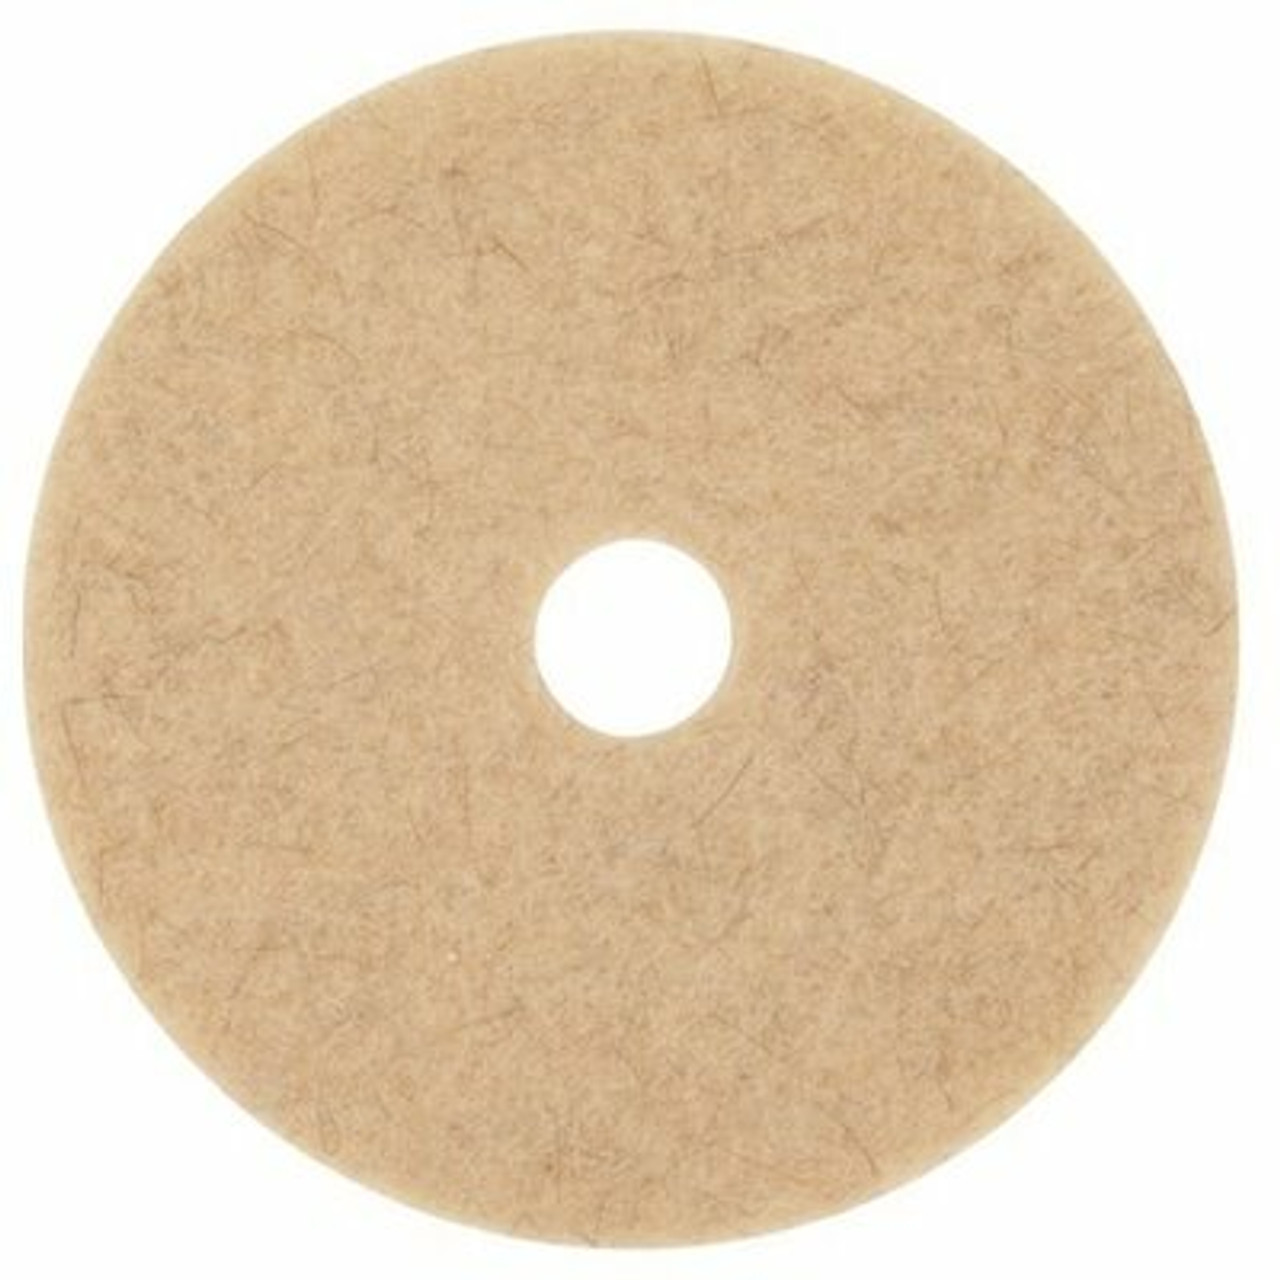 3M 27 In. Natural Blend Tan Floor Pad (5-Count)